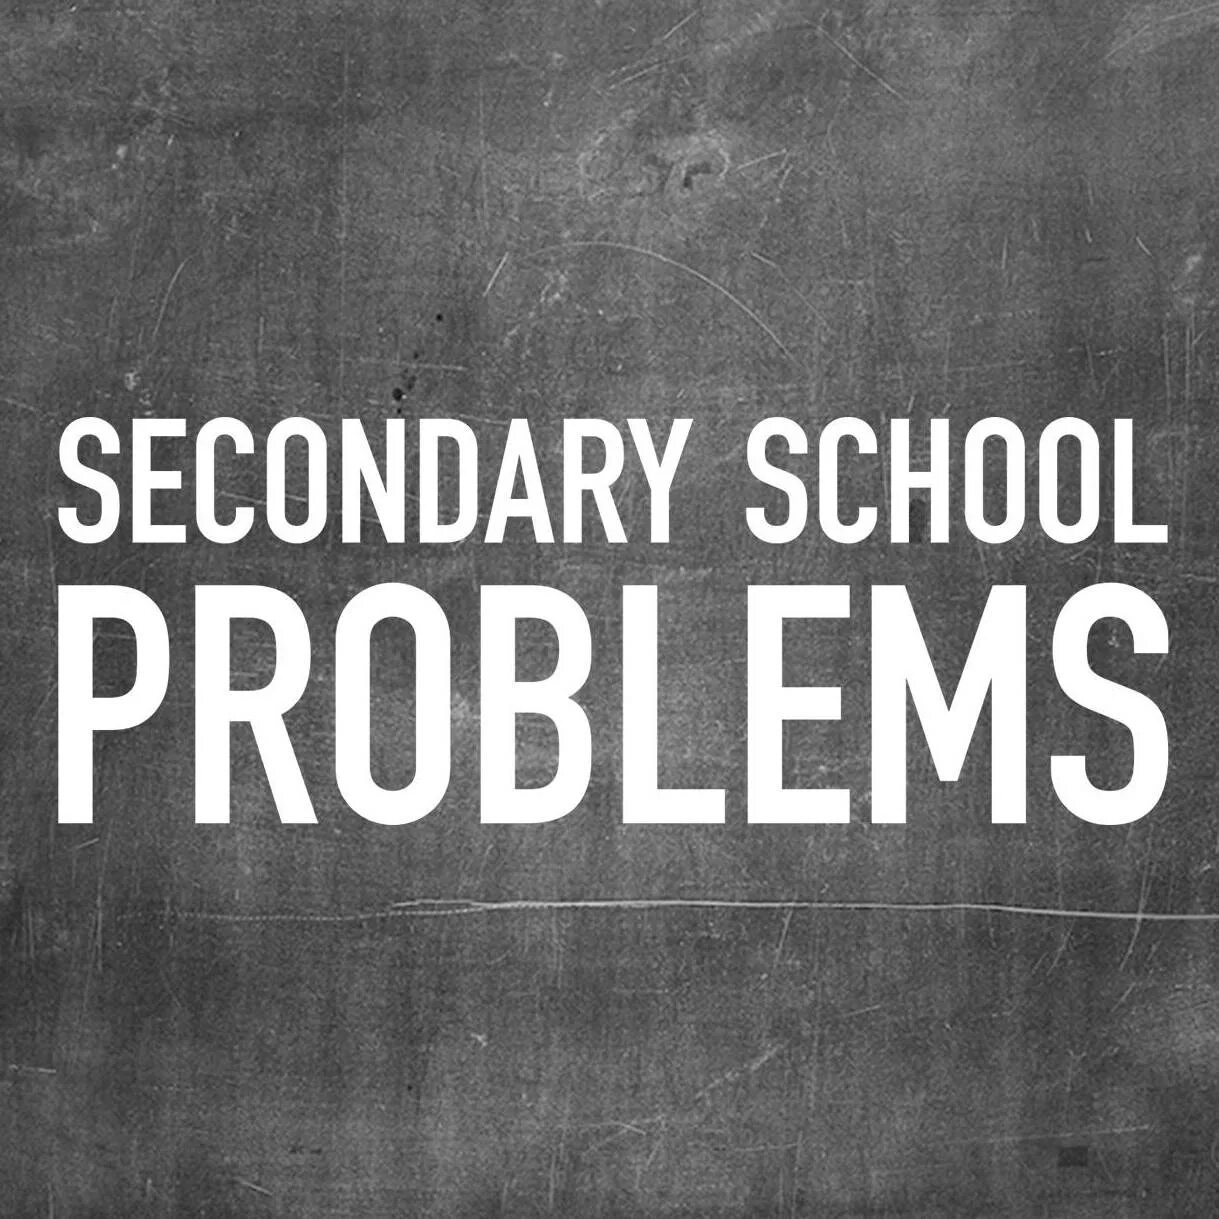 School problems